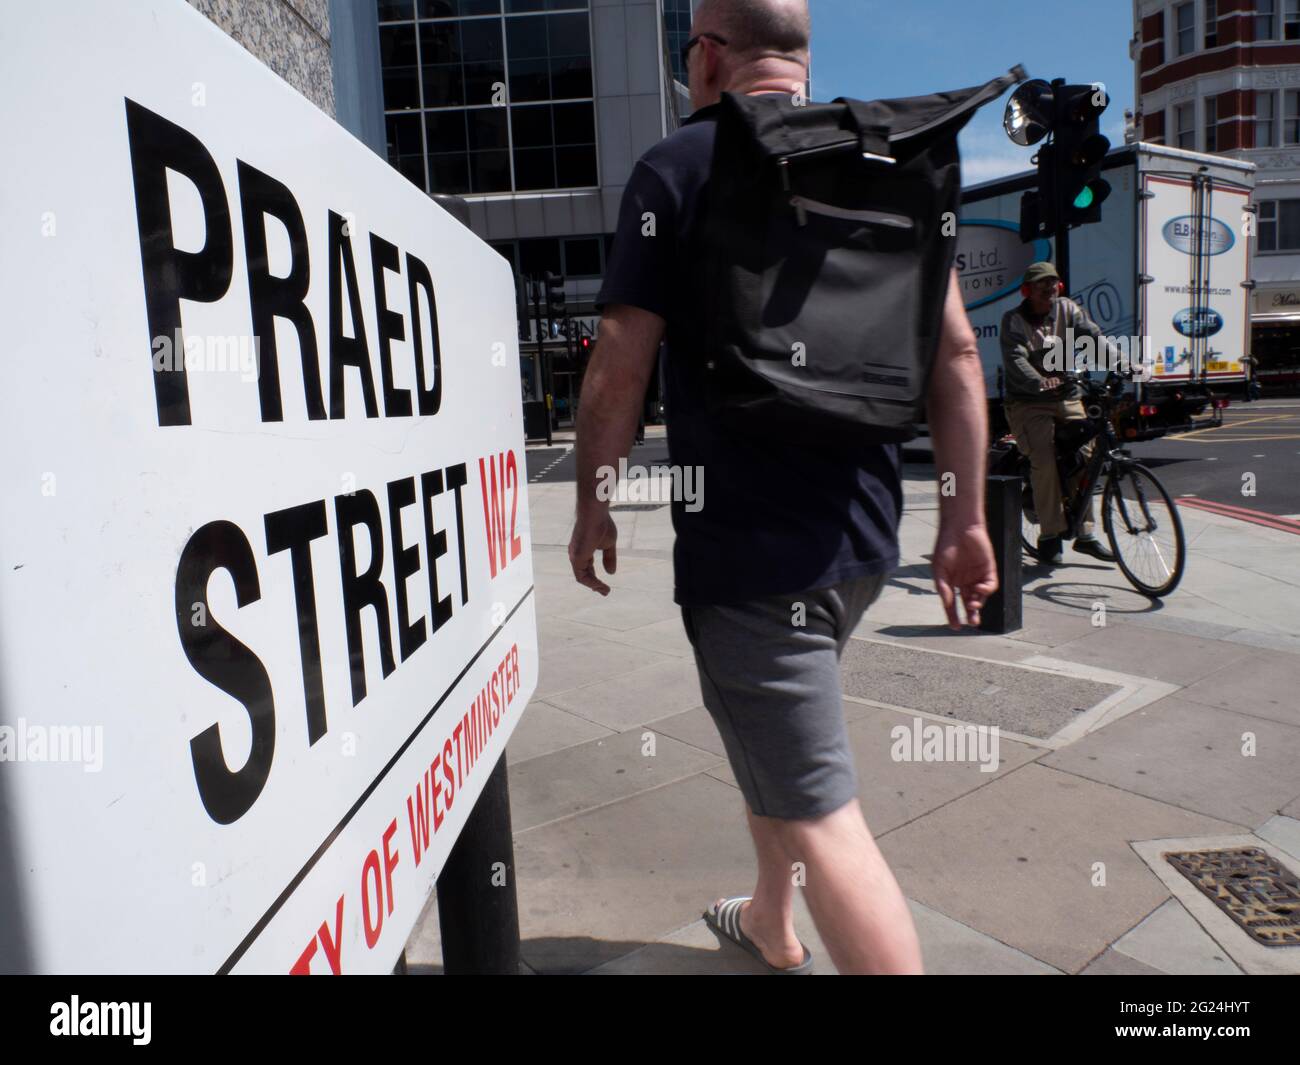 People passing Praed Street, street sign Paddington London Stock Photo